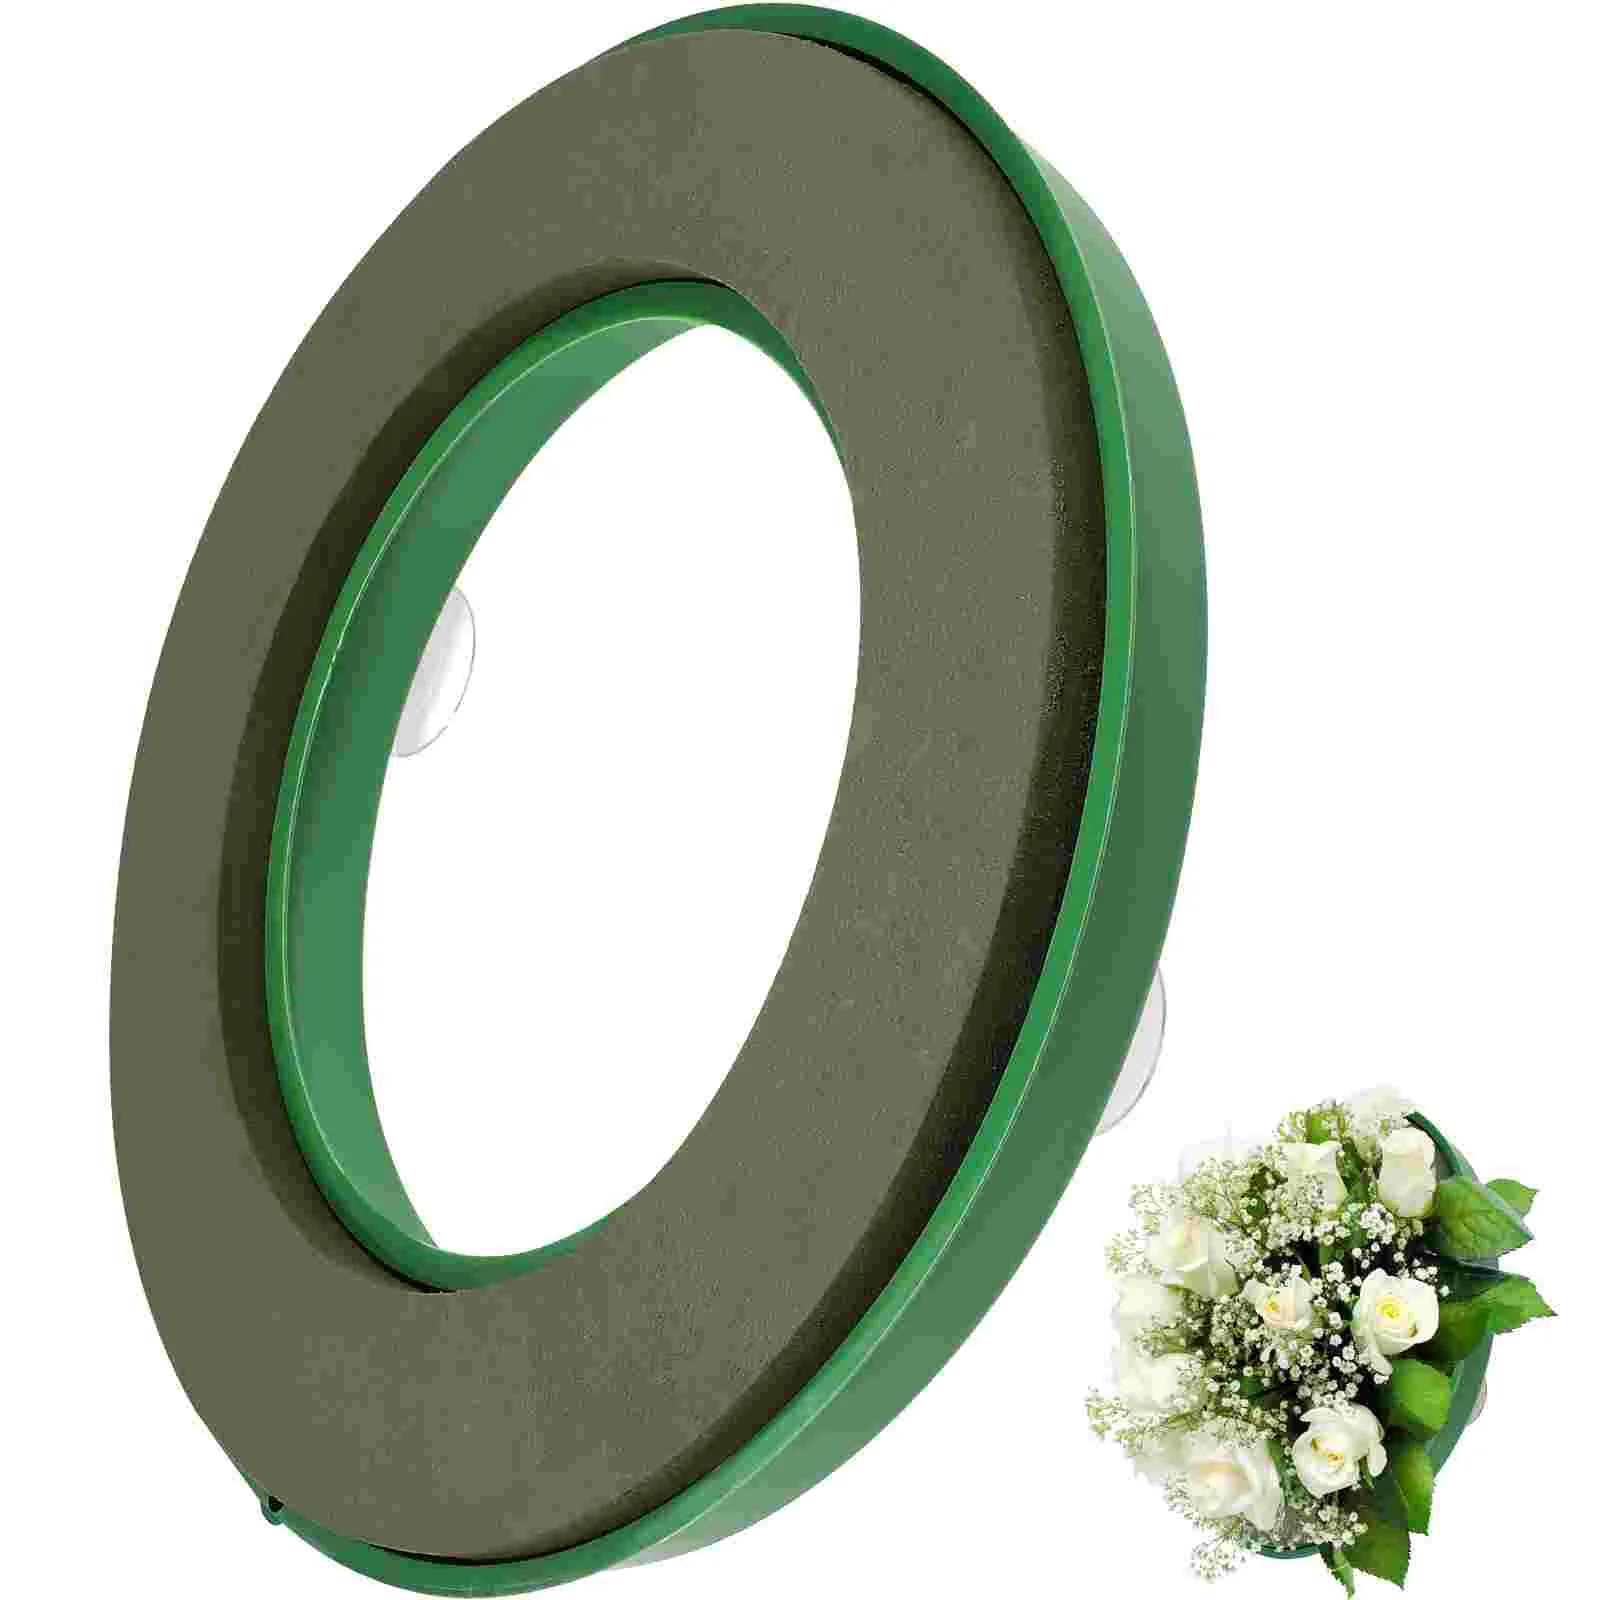 

Foam Floral Wreath Flower Arrangements Blocks Hoop Ring Supplies Funeral Round